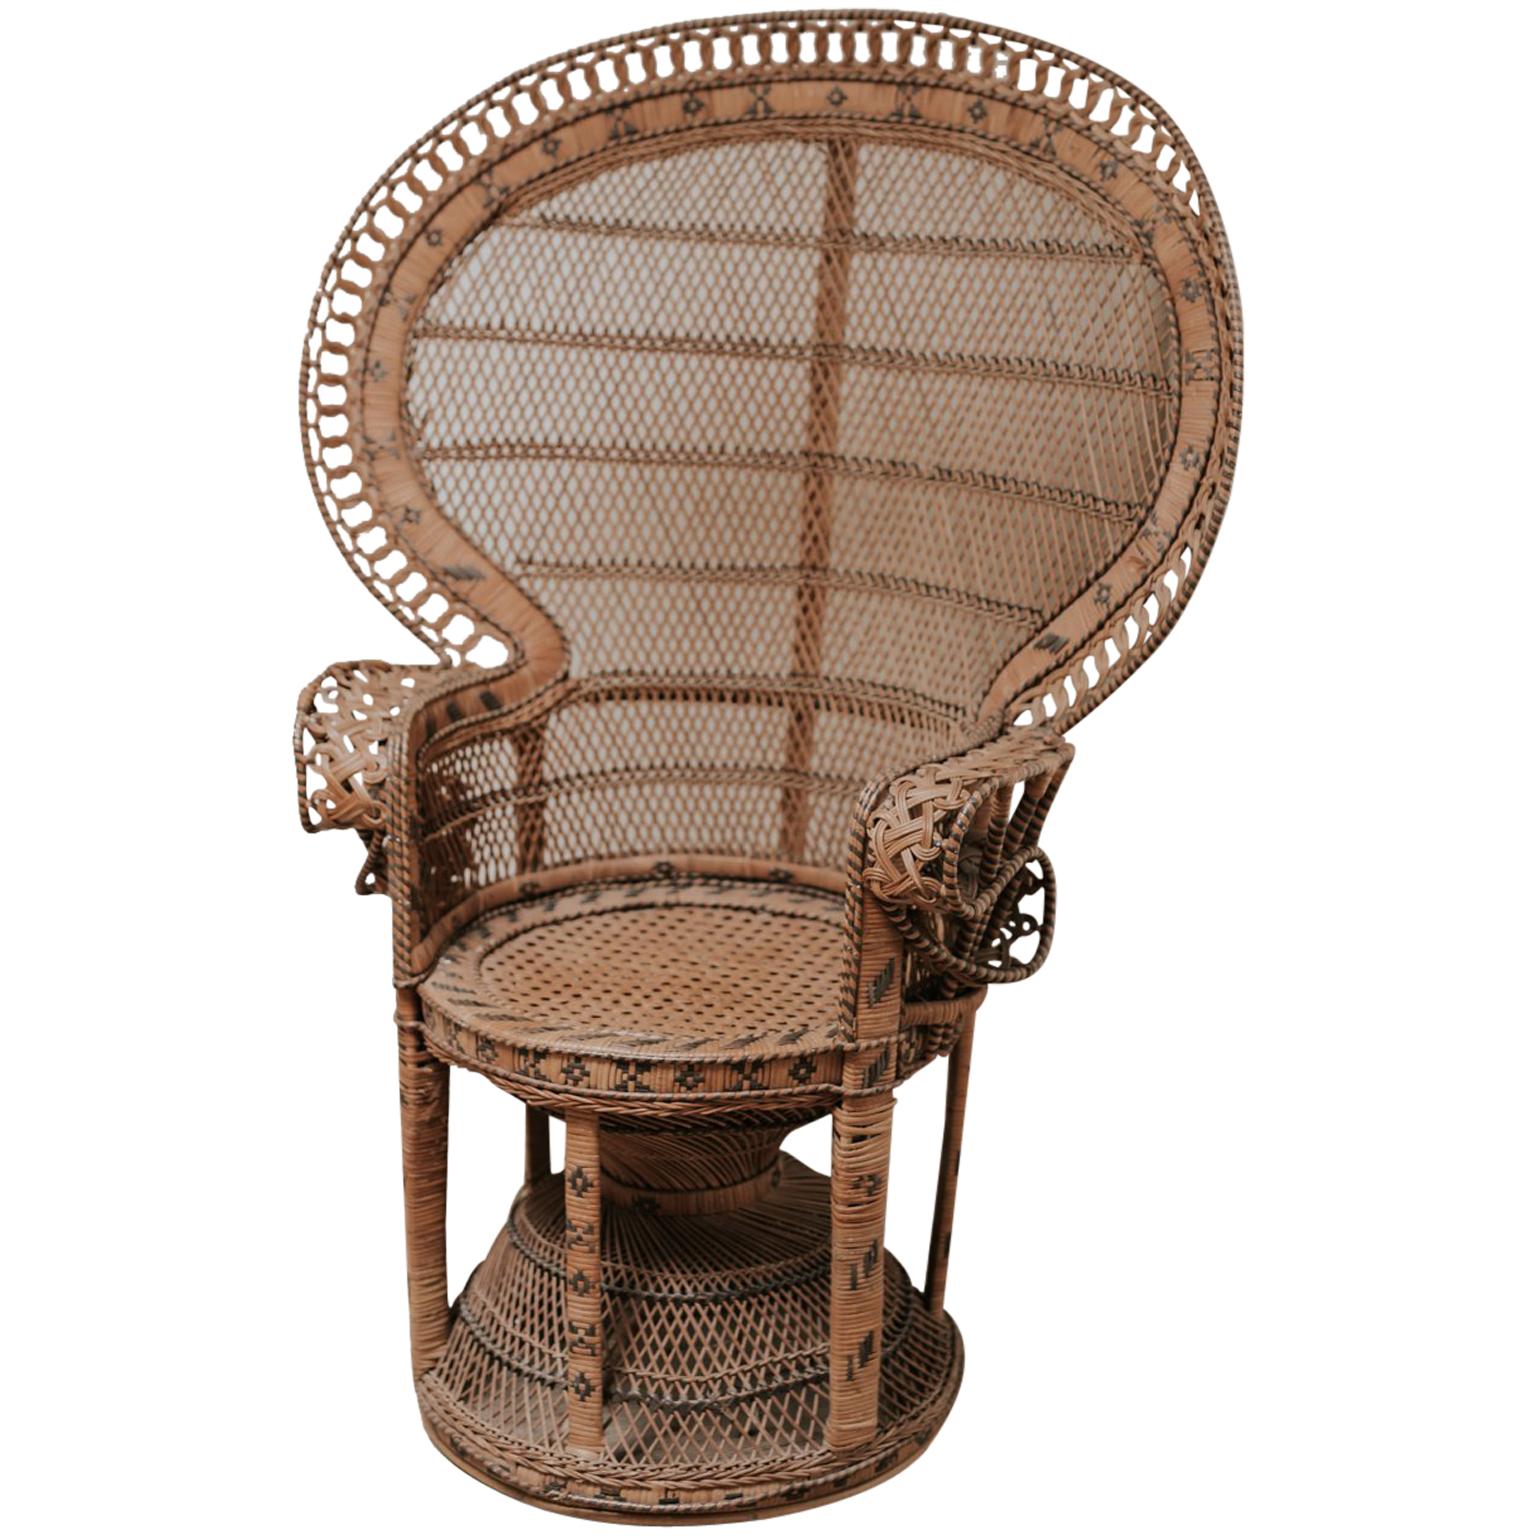 20th Century Rattan/Wicker Peacock "Emanuelle" Chair